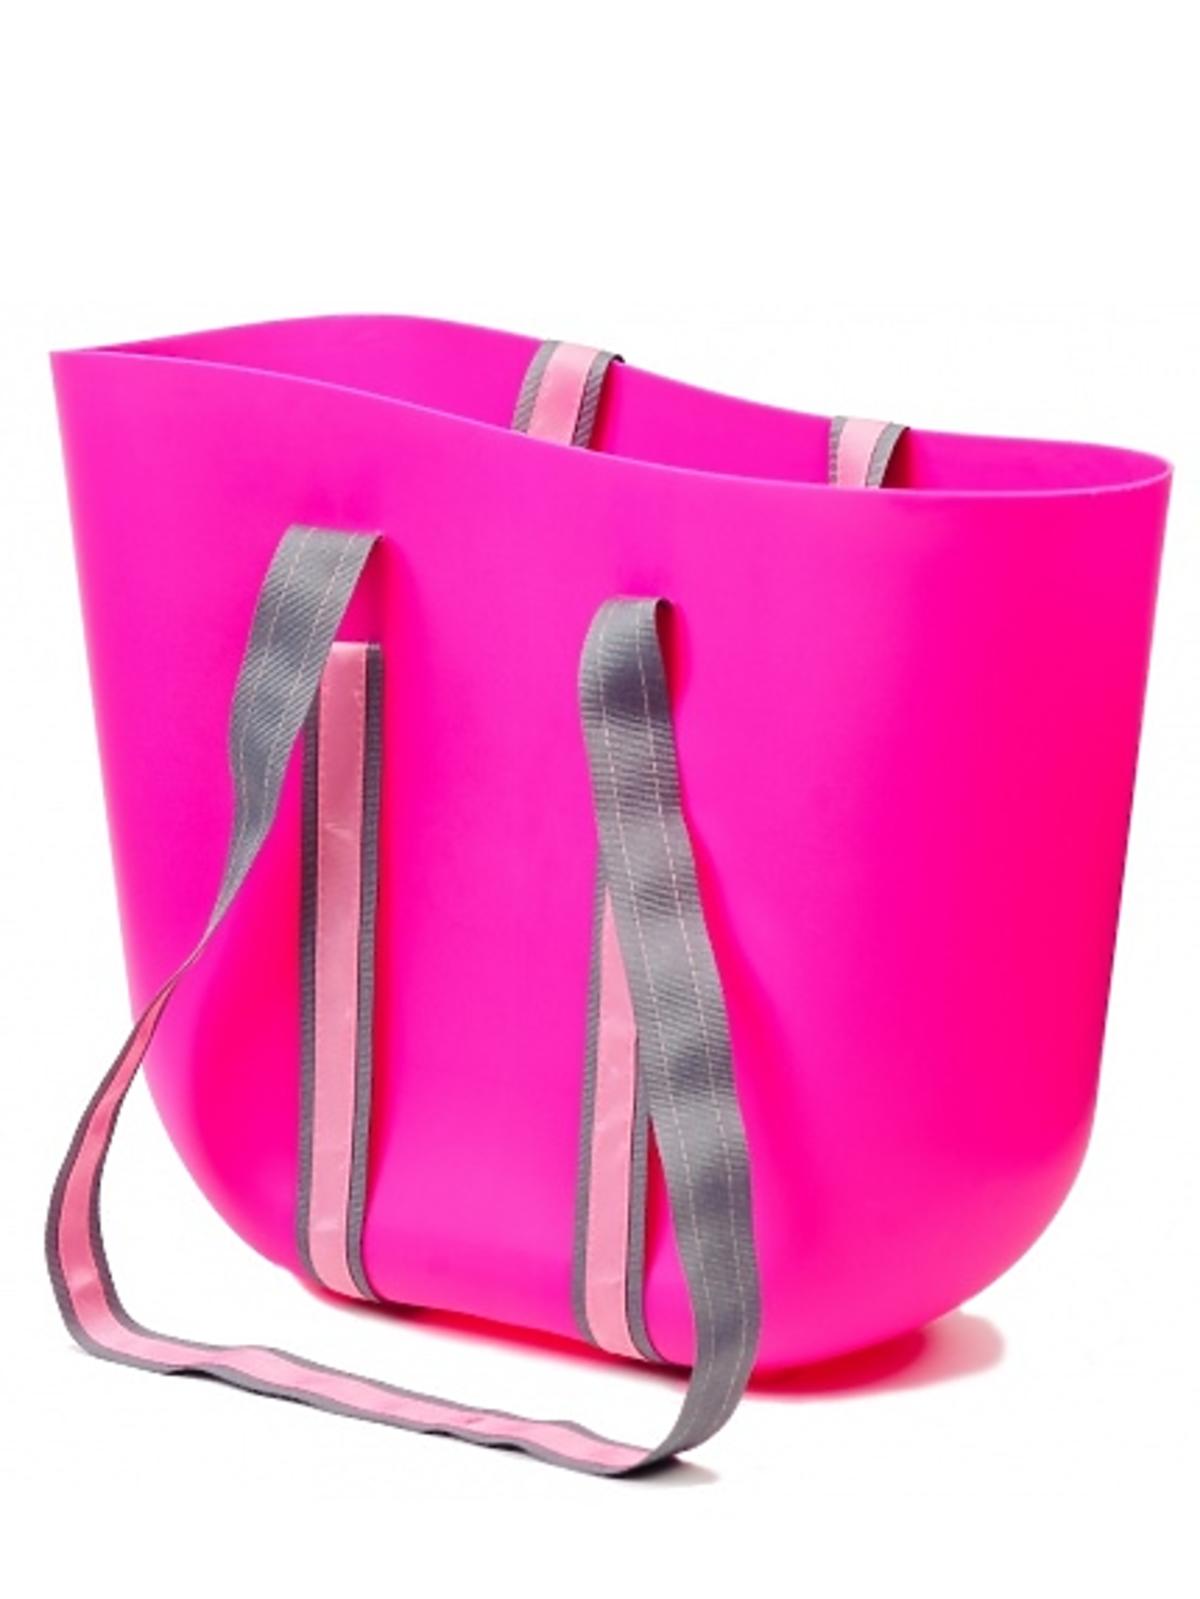 Rubberies Summer Bag Pink Basket - torba plażowa 